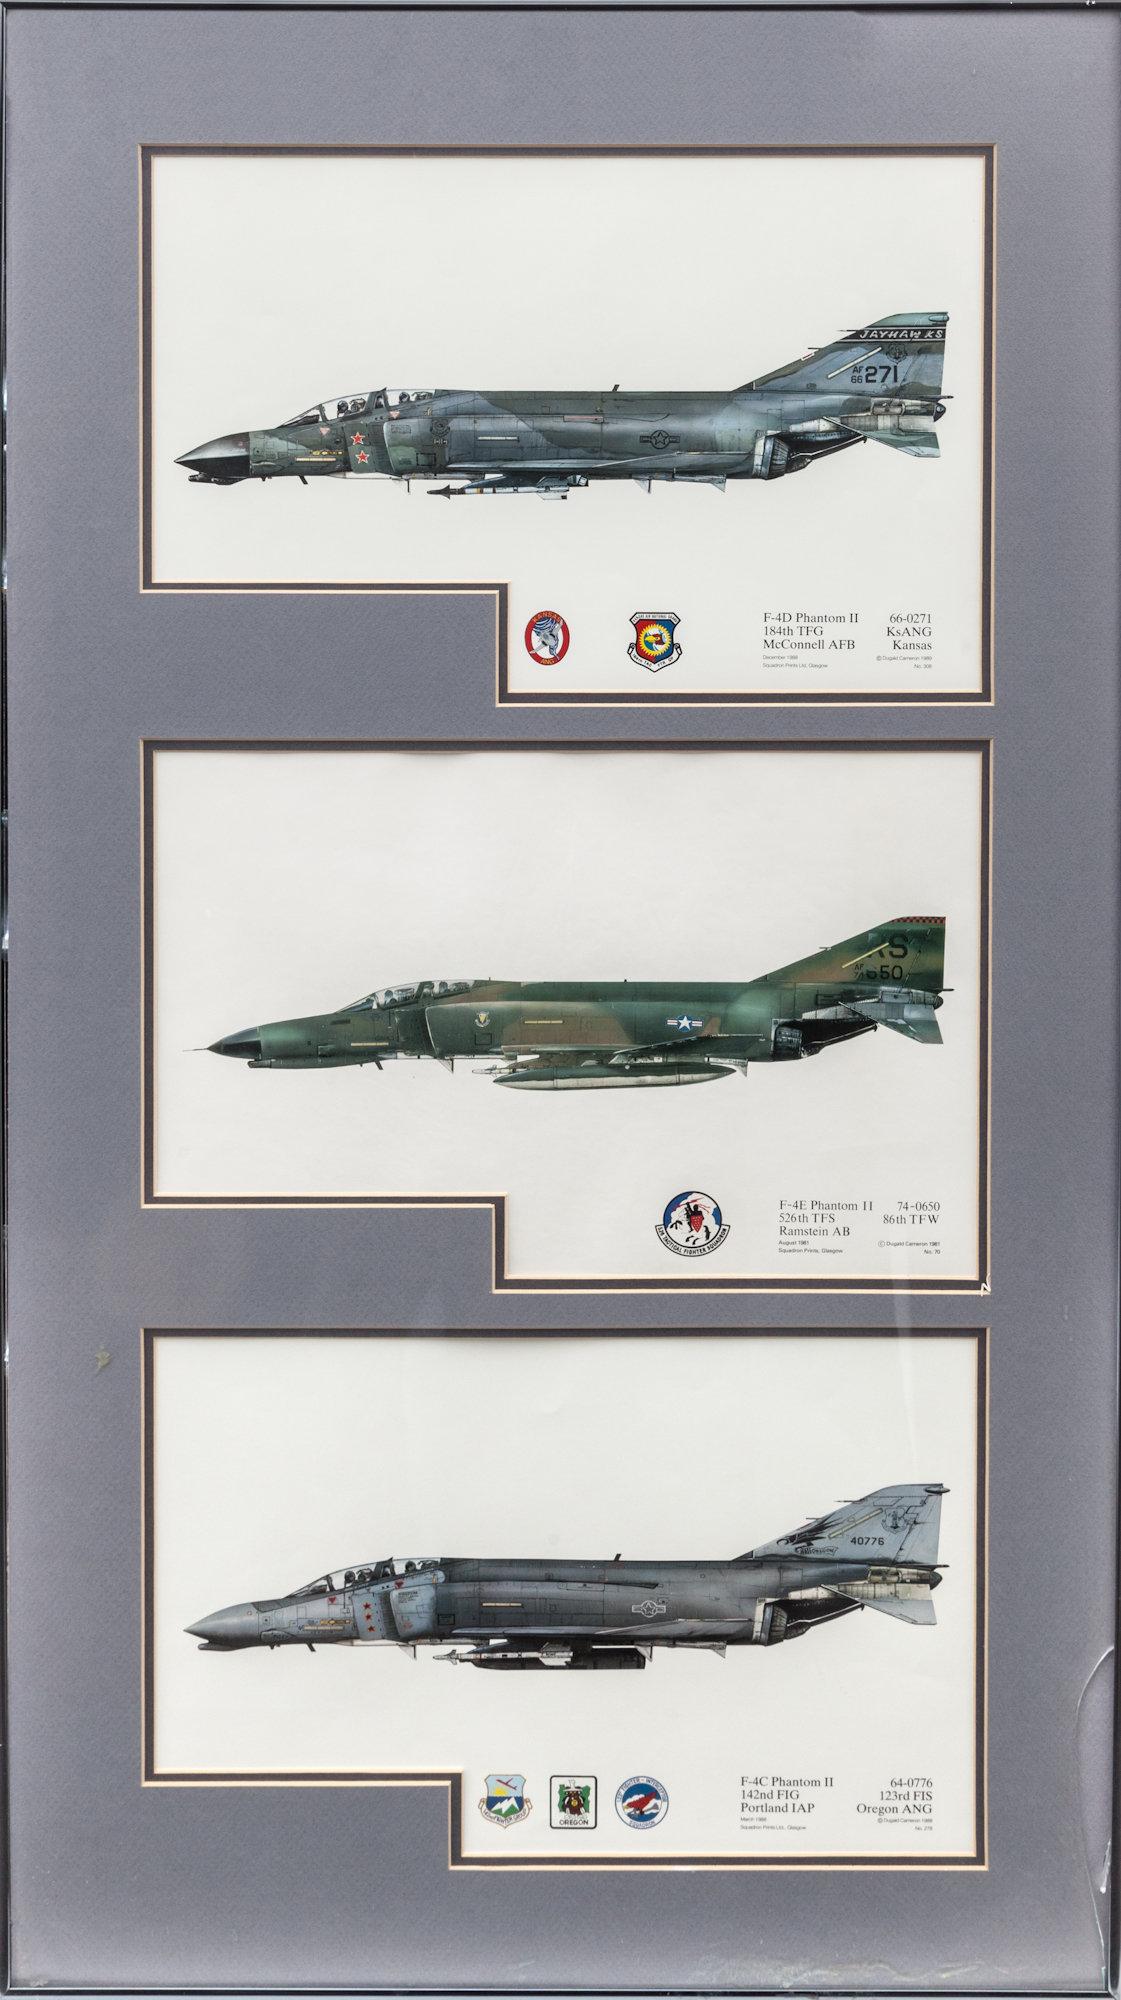 Lot of 2 Framed Sets of Phantom II Prints